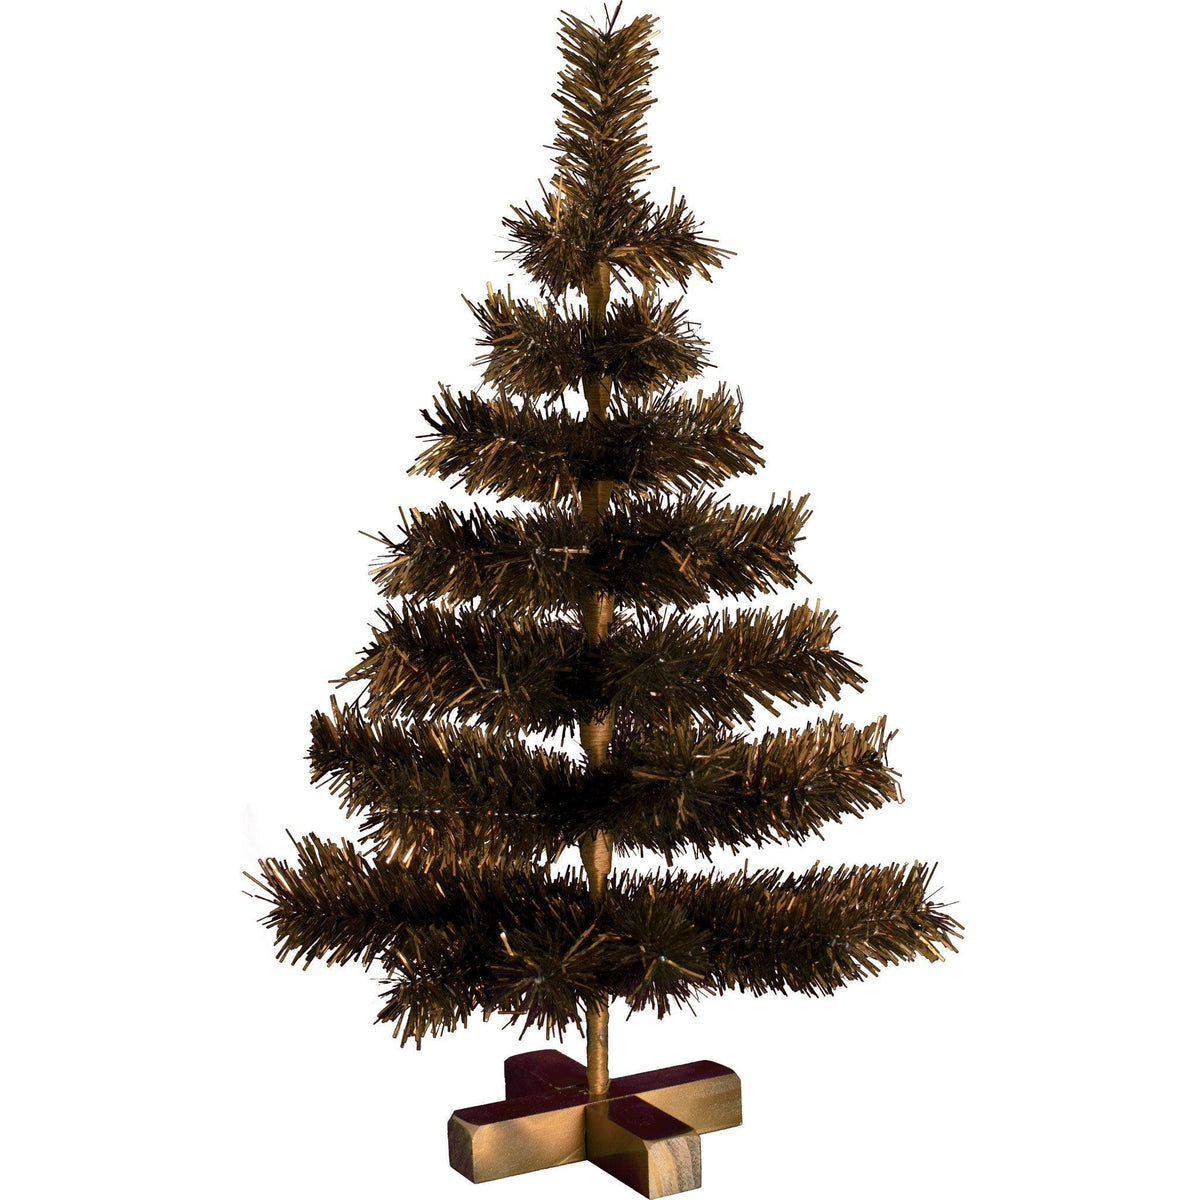 Lee Display's brand new 24in Vintage Copper Tinsel Christmas Trees on sale at leedisplay.com